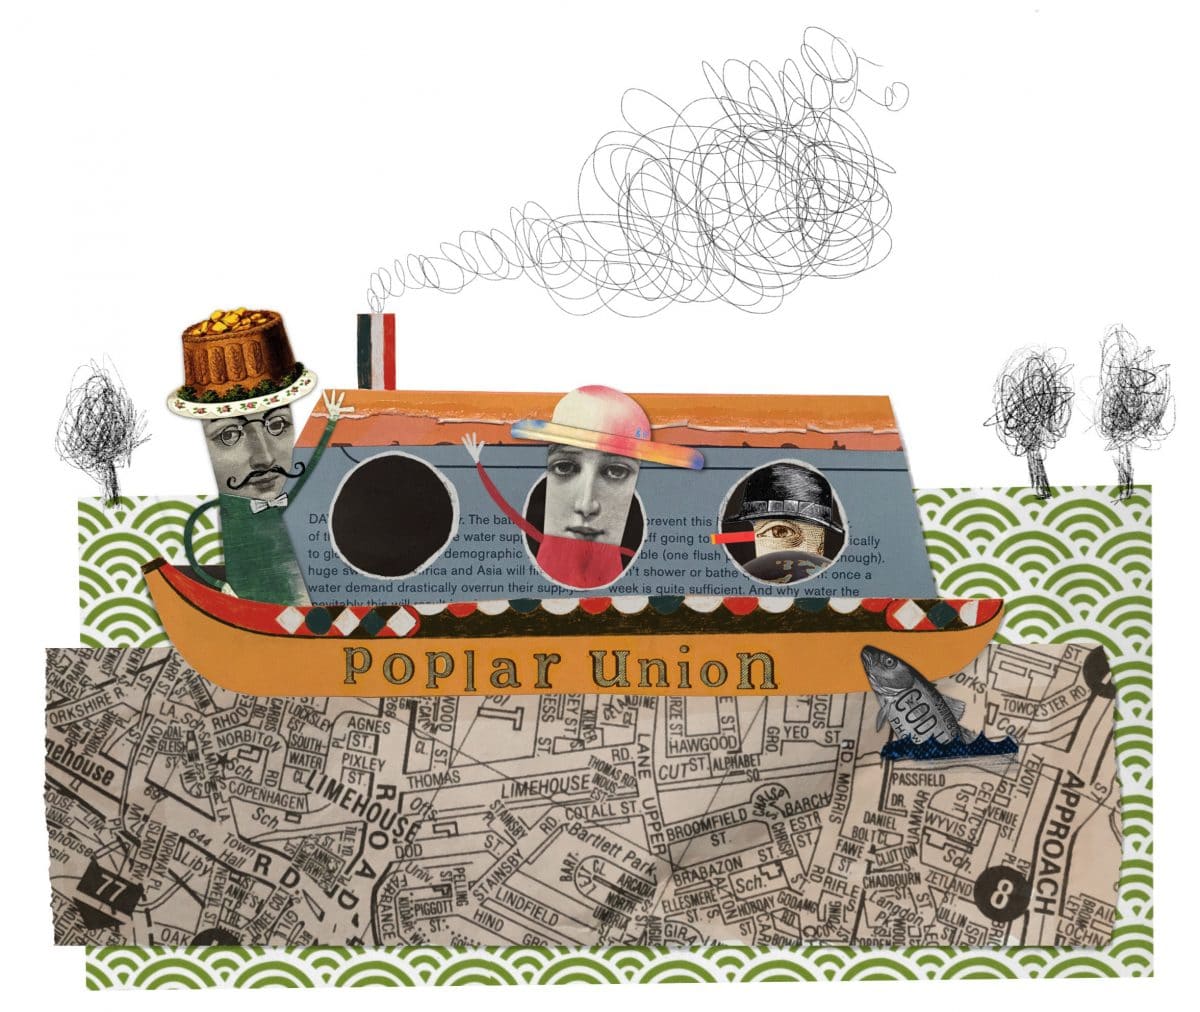 Poplar union, art, culture community, east London, Canal